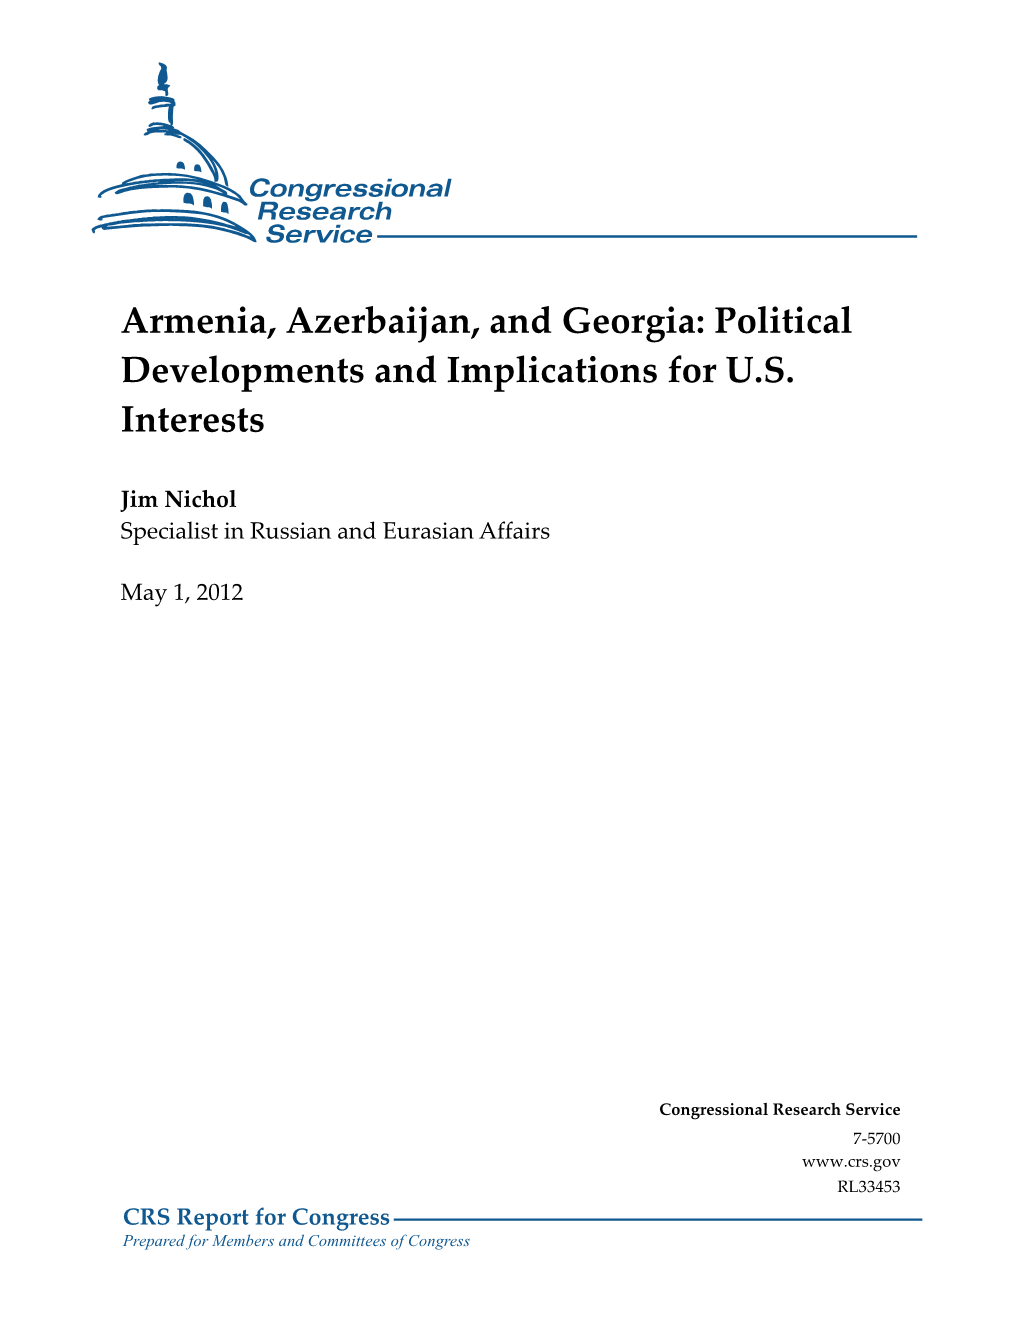 Armenia, Azerbaijan, and Georgia: Political Developments and Implications for U.S